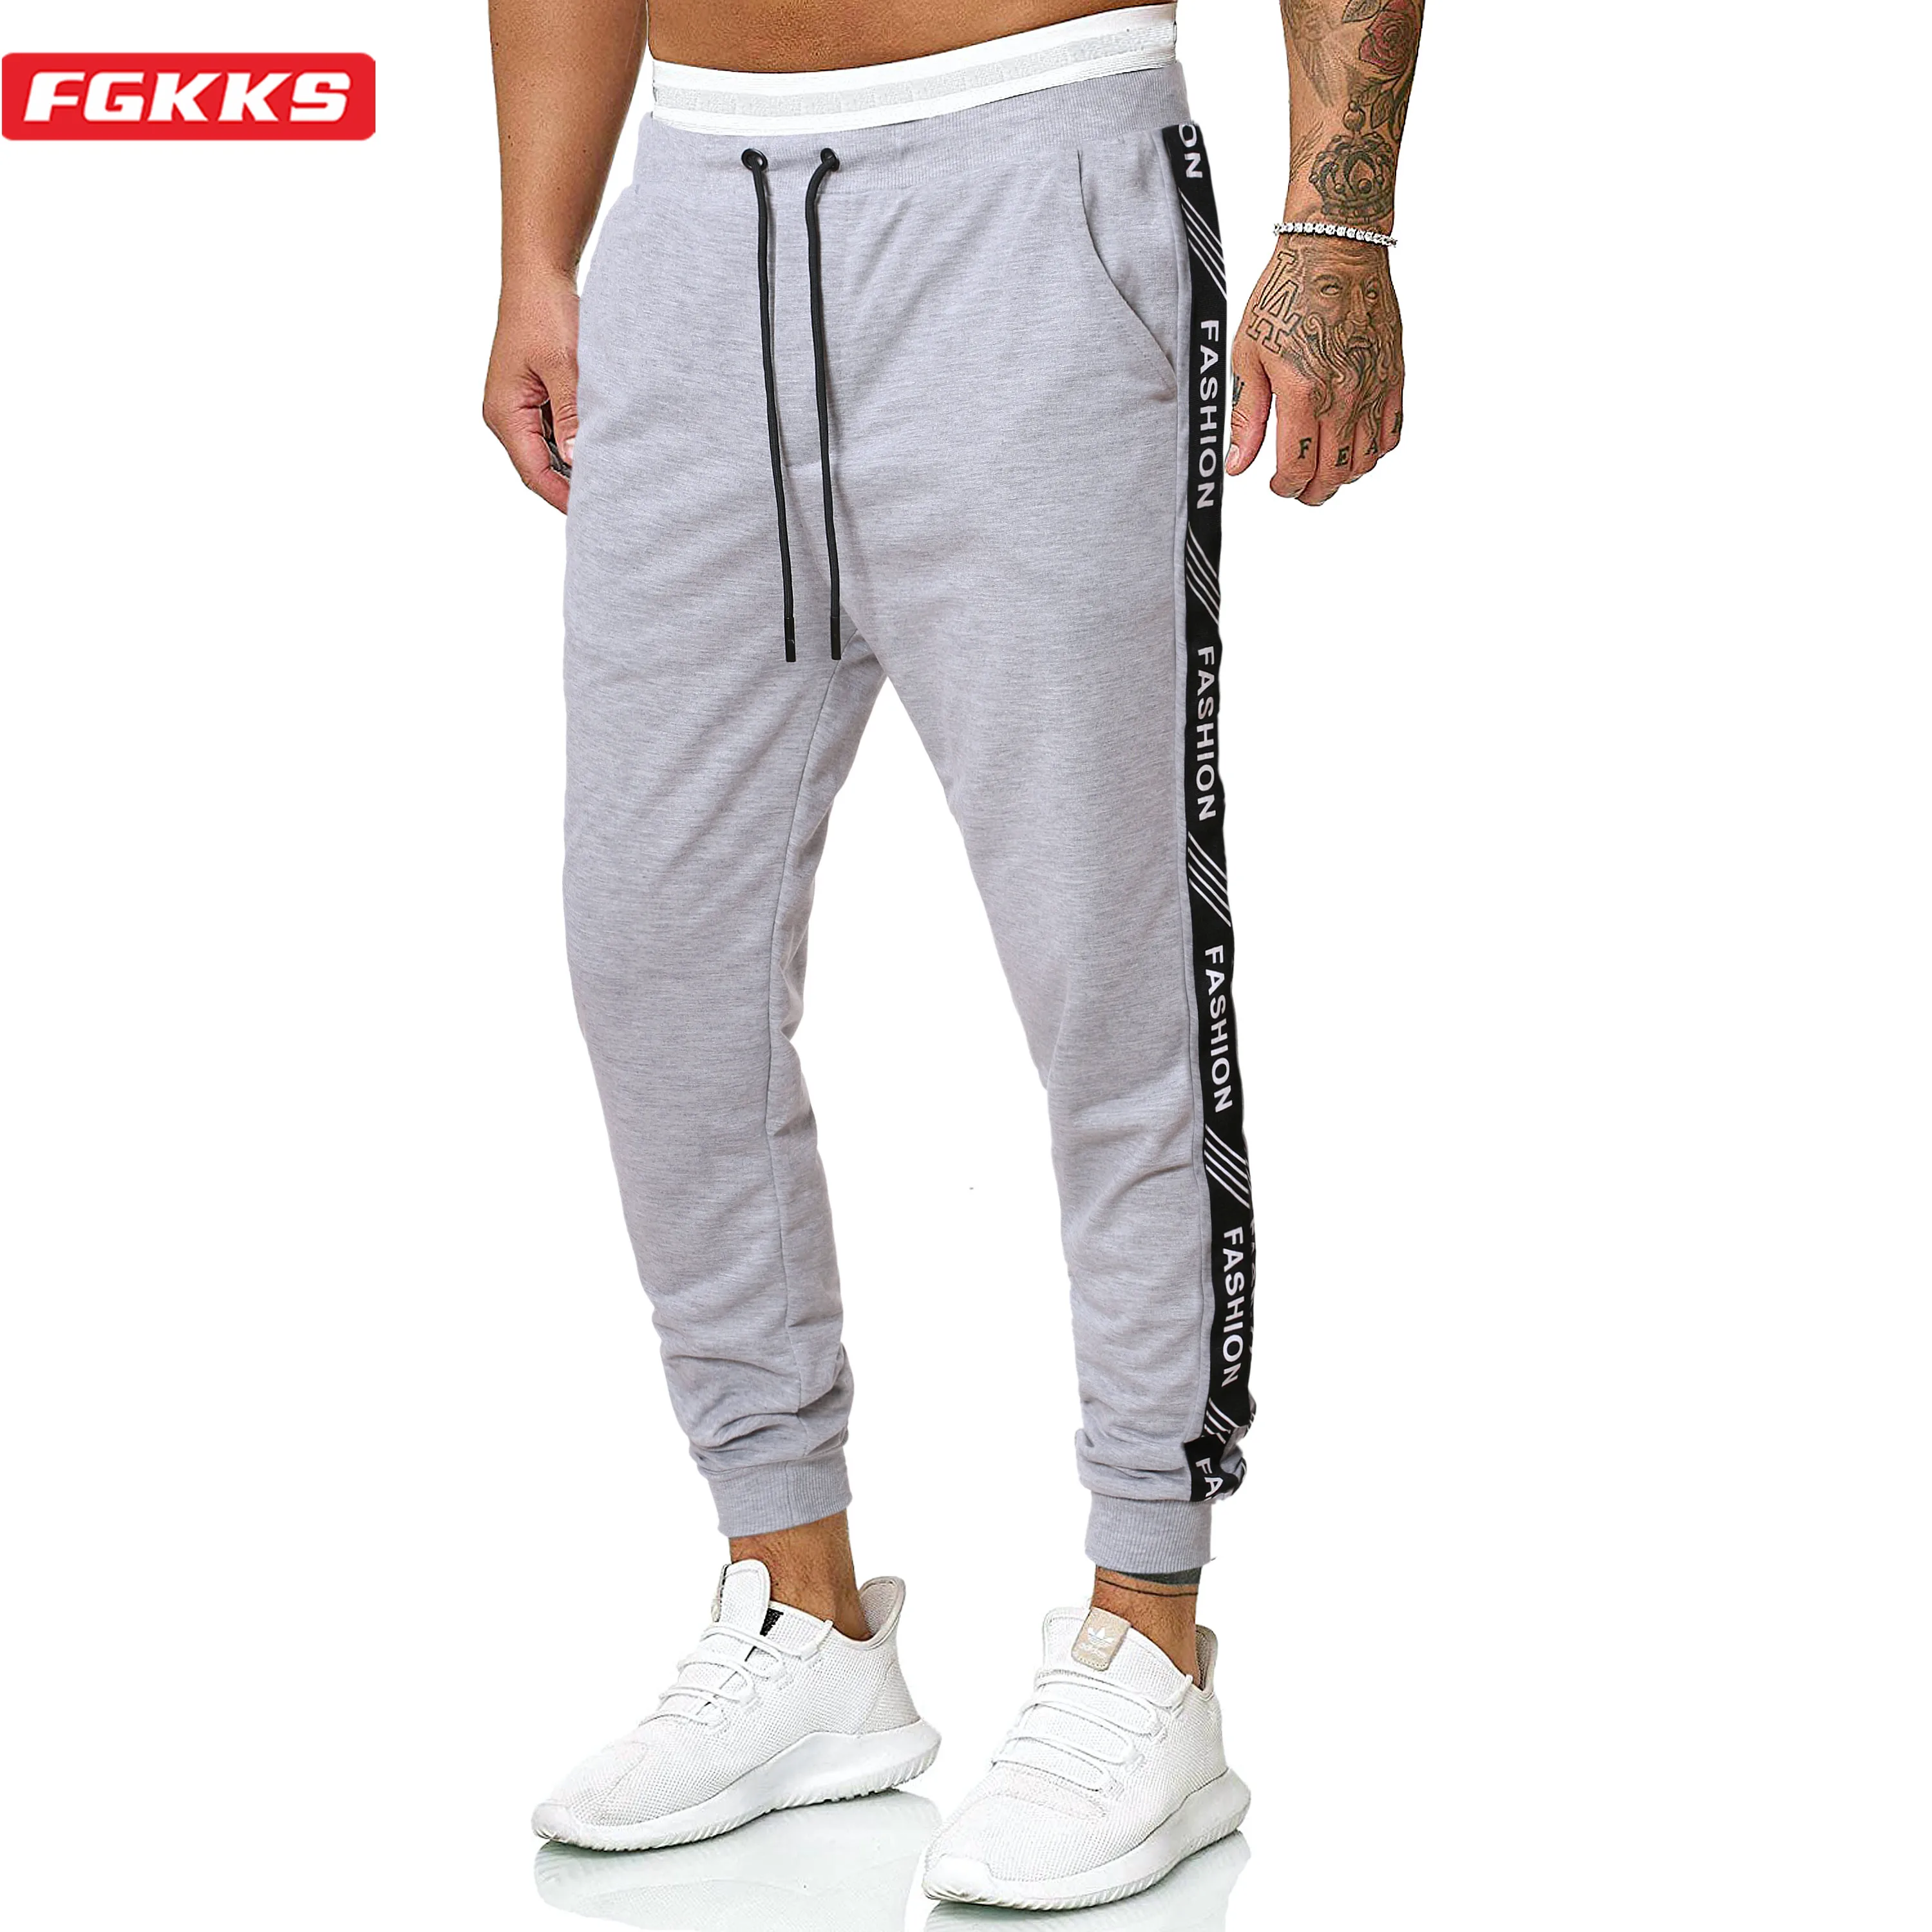 

FGKKS Men's Casual Pants Fashion Skinny Stretch Trousers Elastic Brand Drawstring Sweatpants Slim Fit Jogging Pants Male